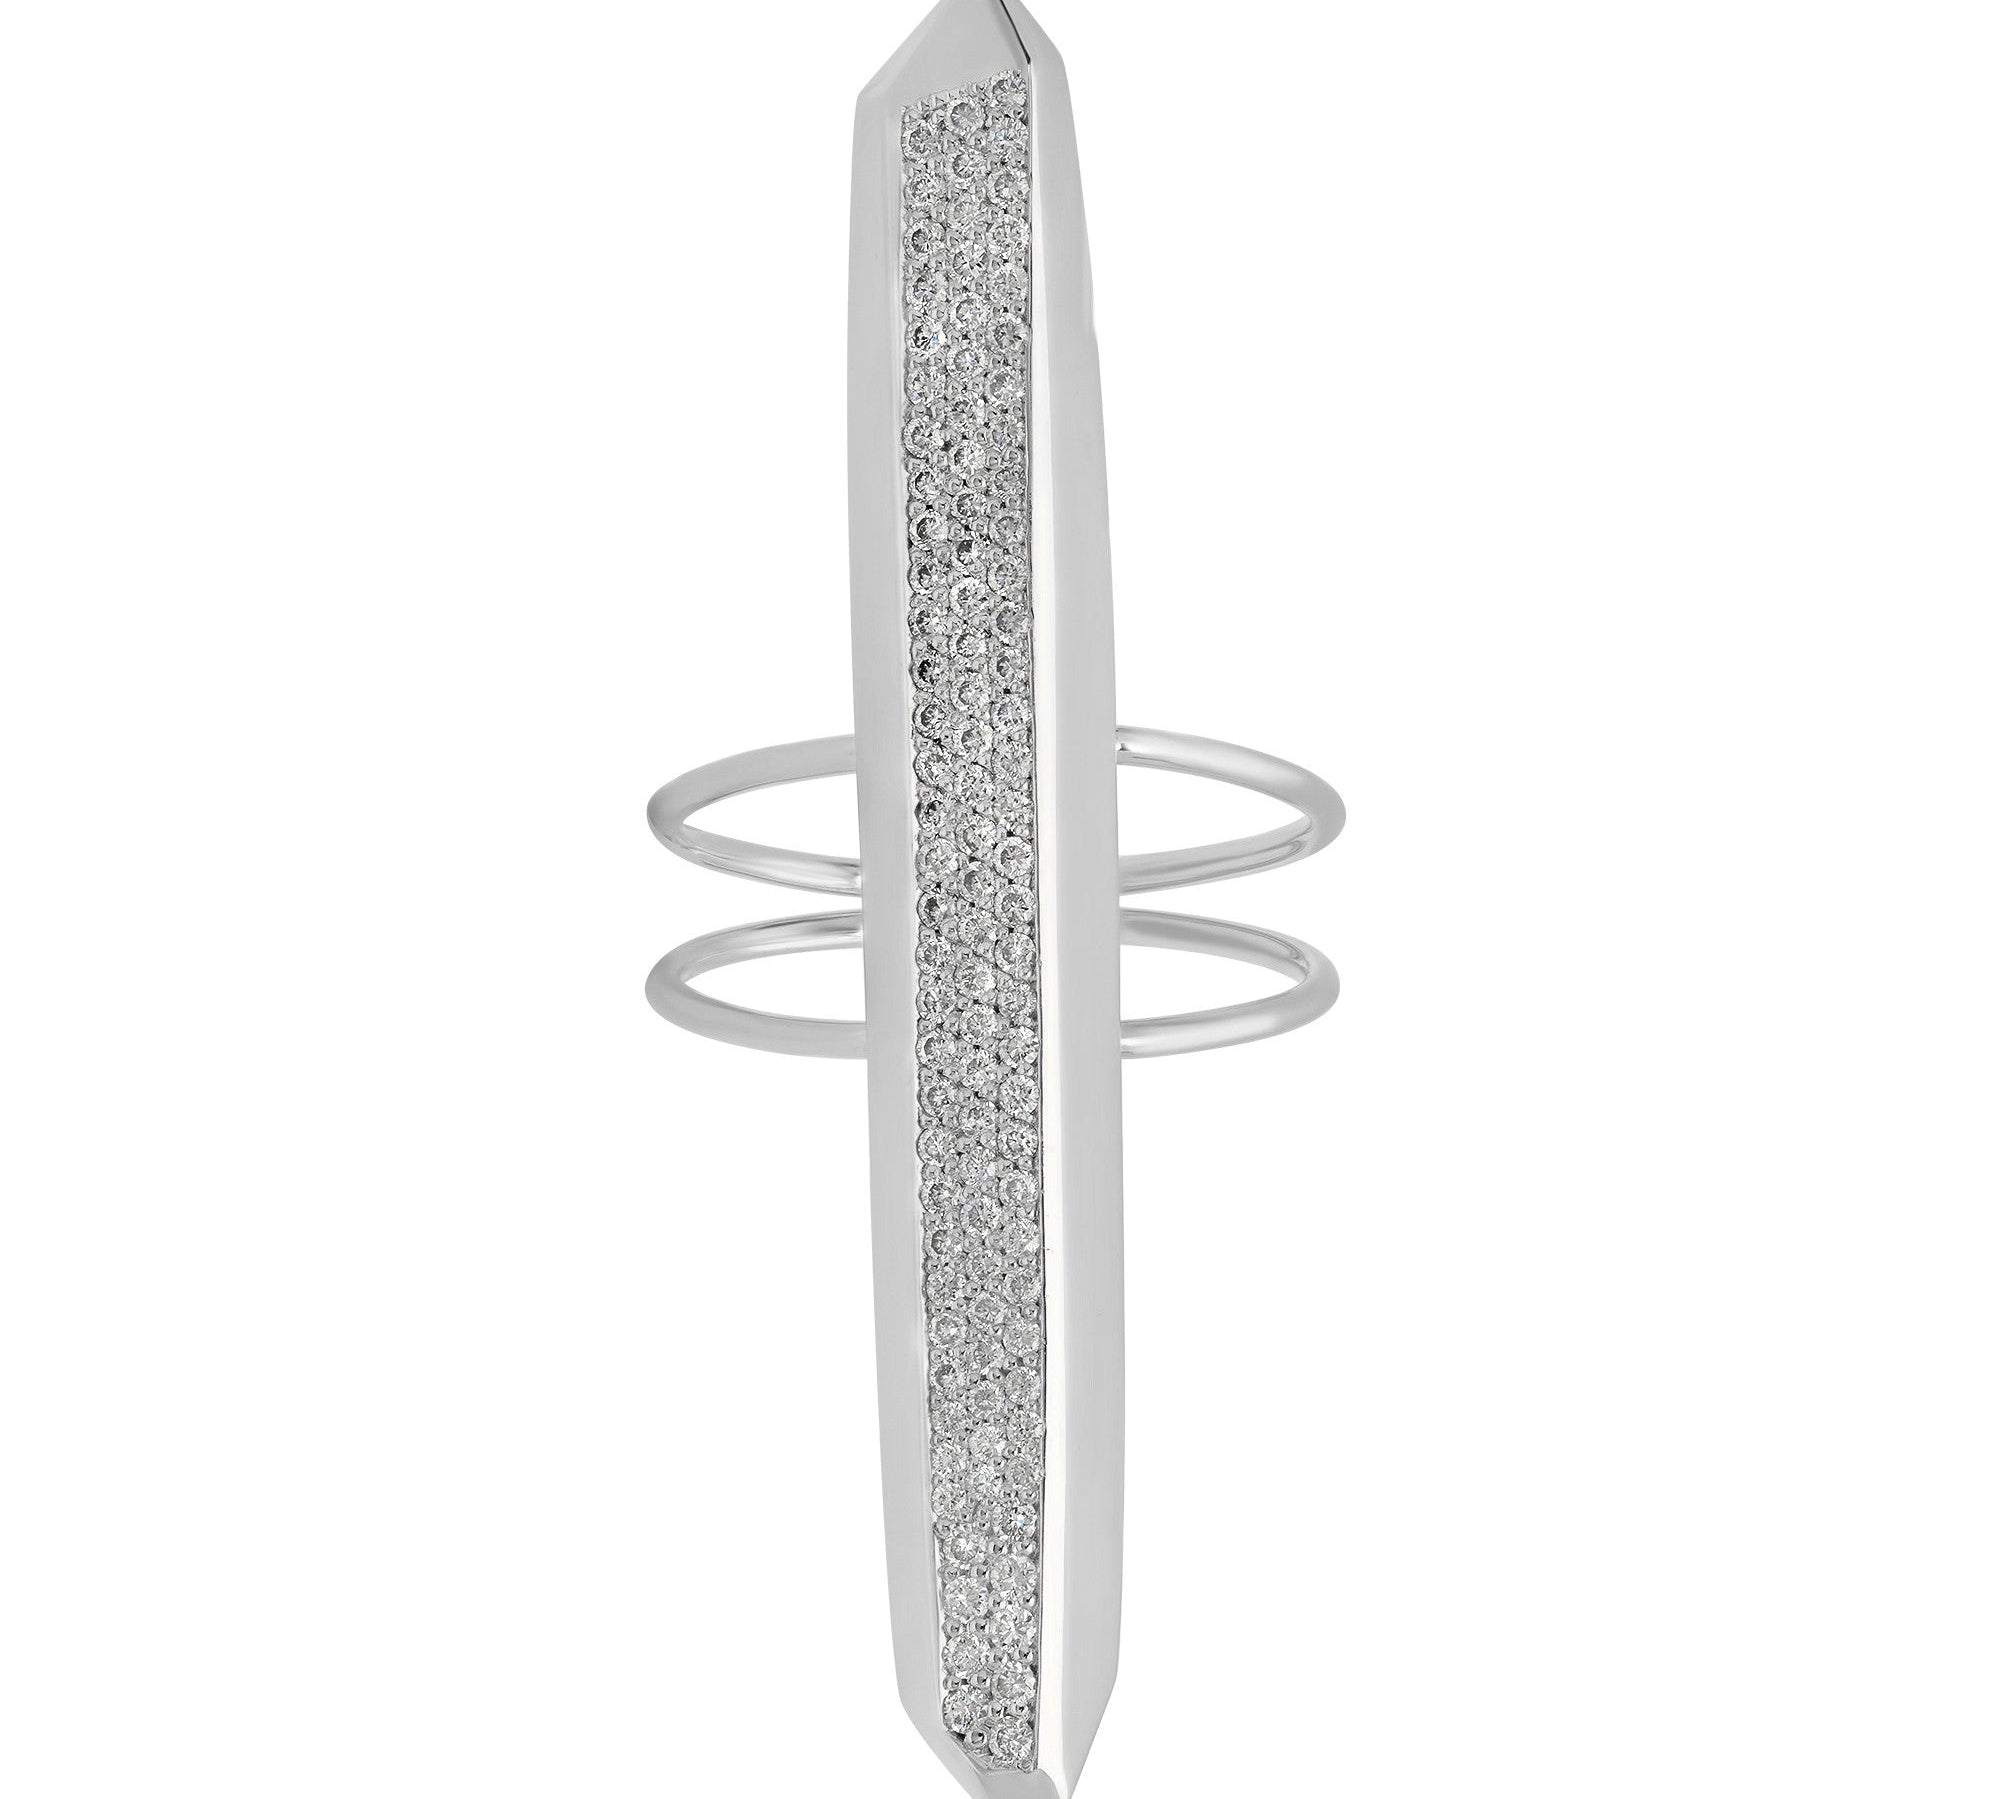 Diamond Crystalline Ring Statement Elisabeth Bell Jewelry 5 White Gold 